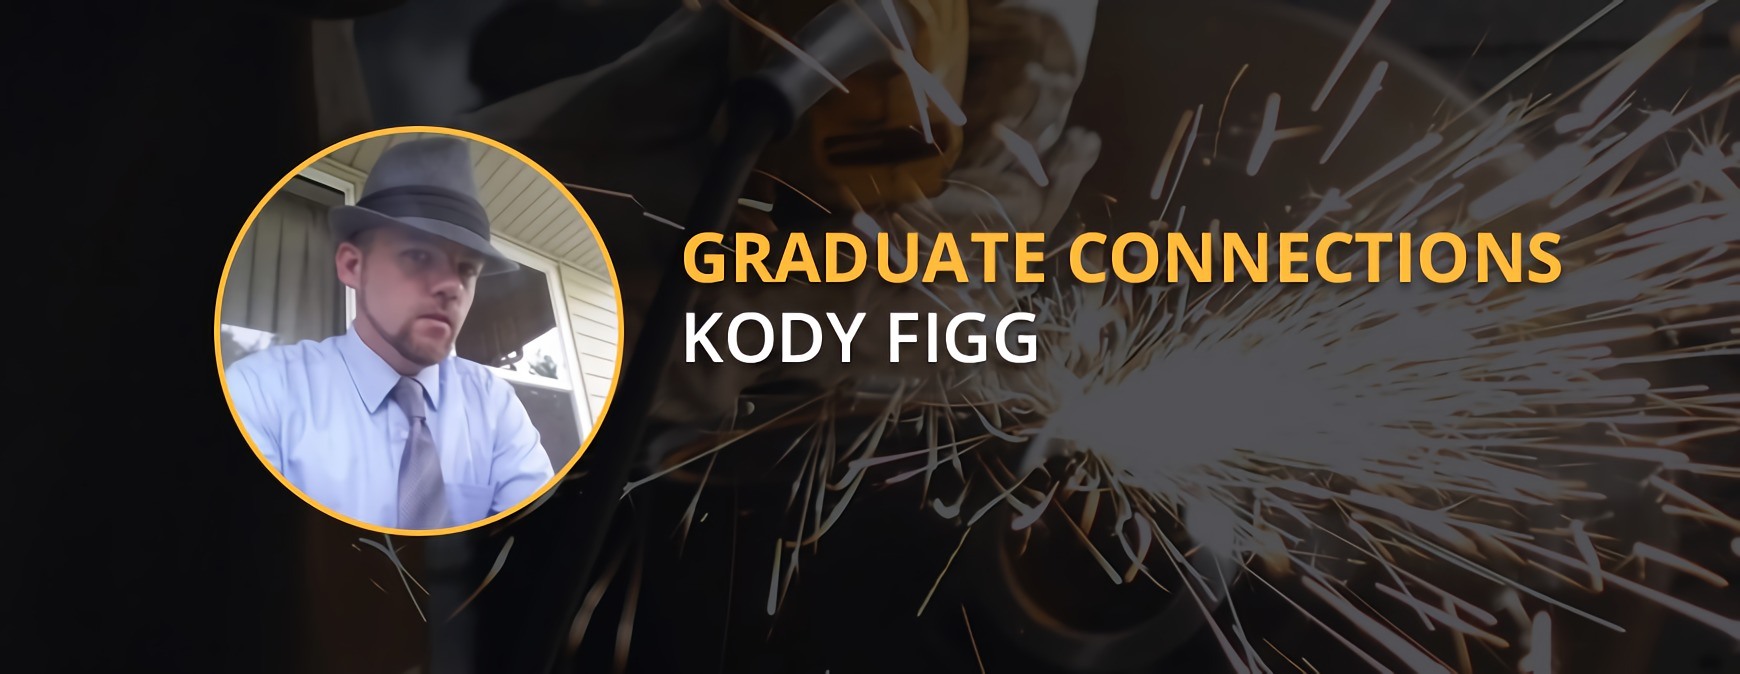 graduate connection kody figg